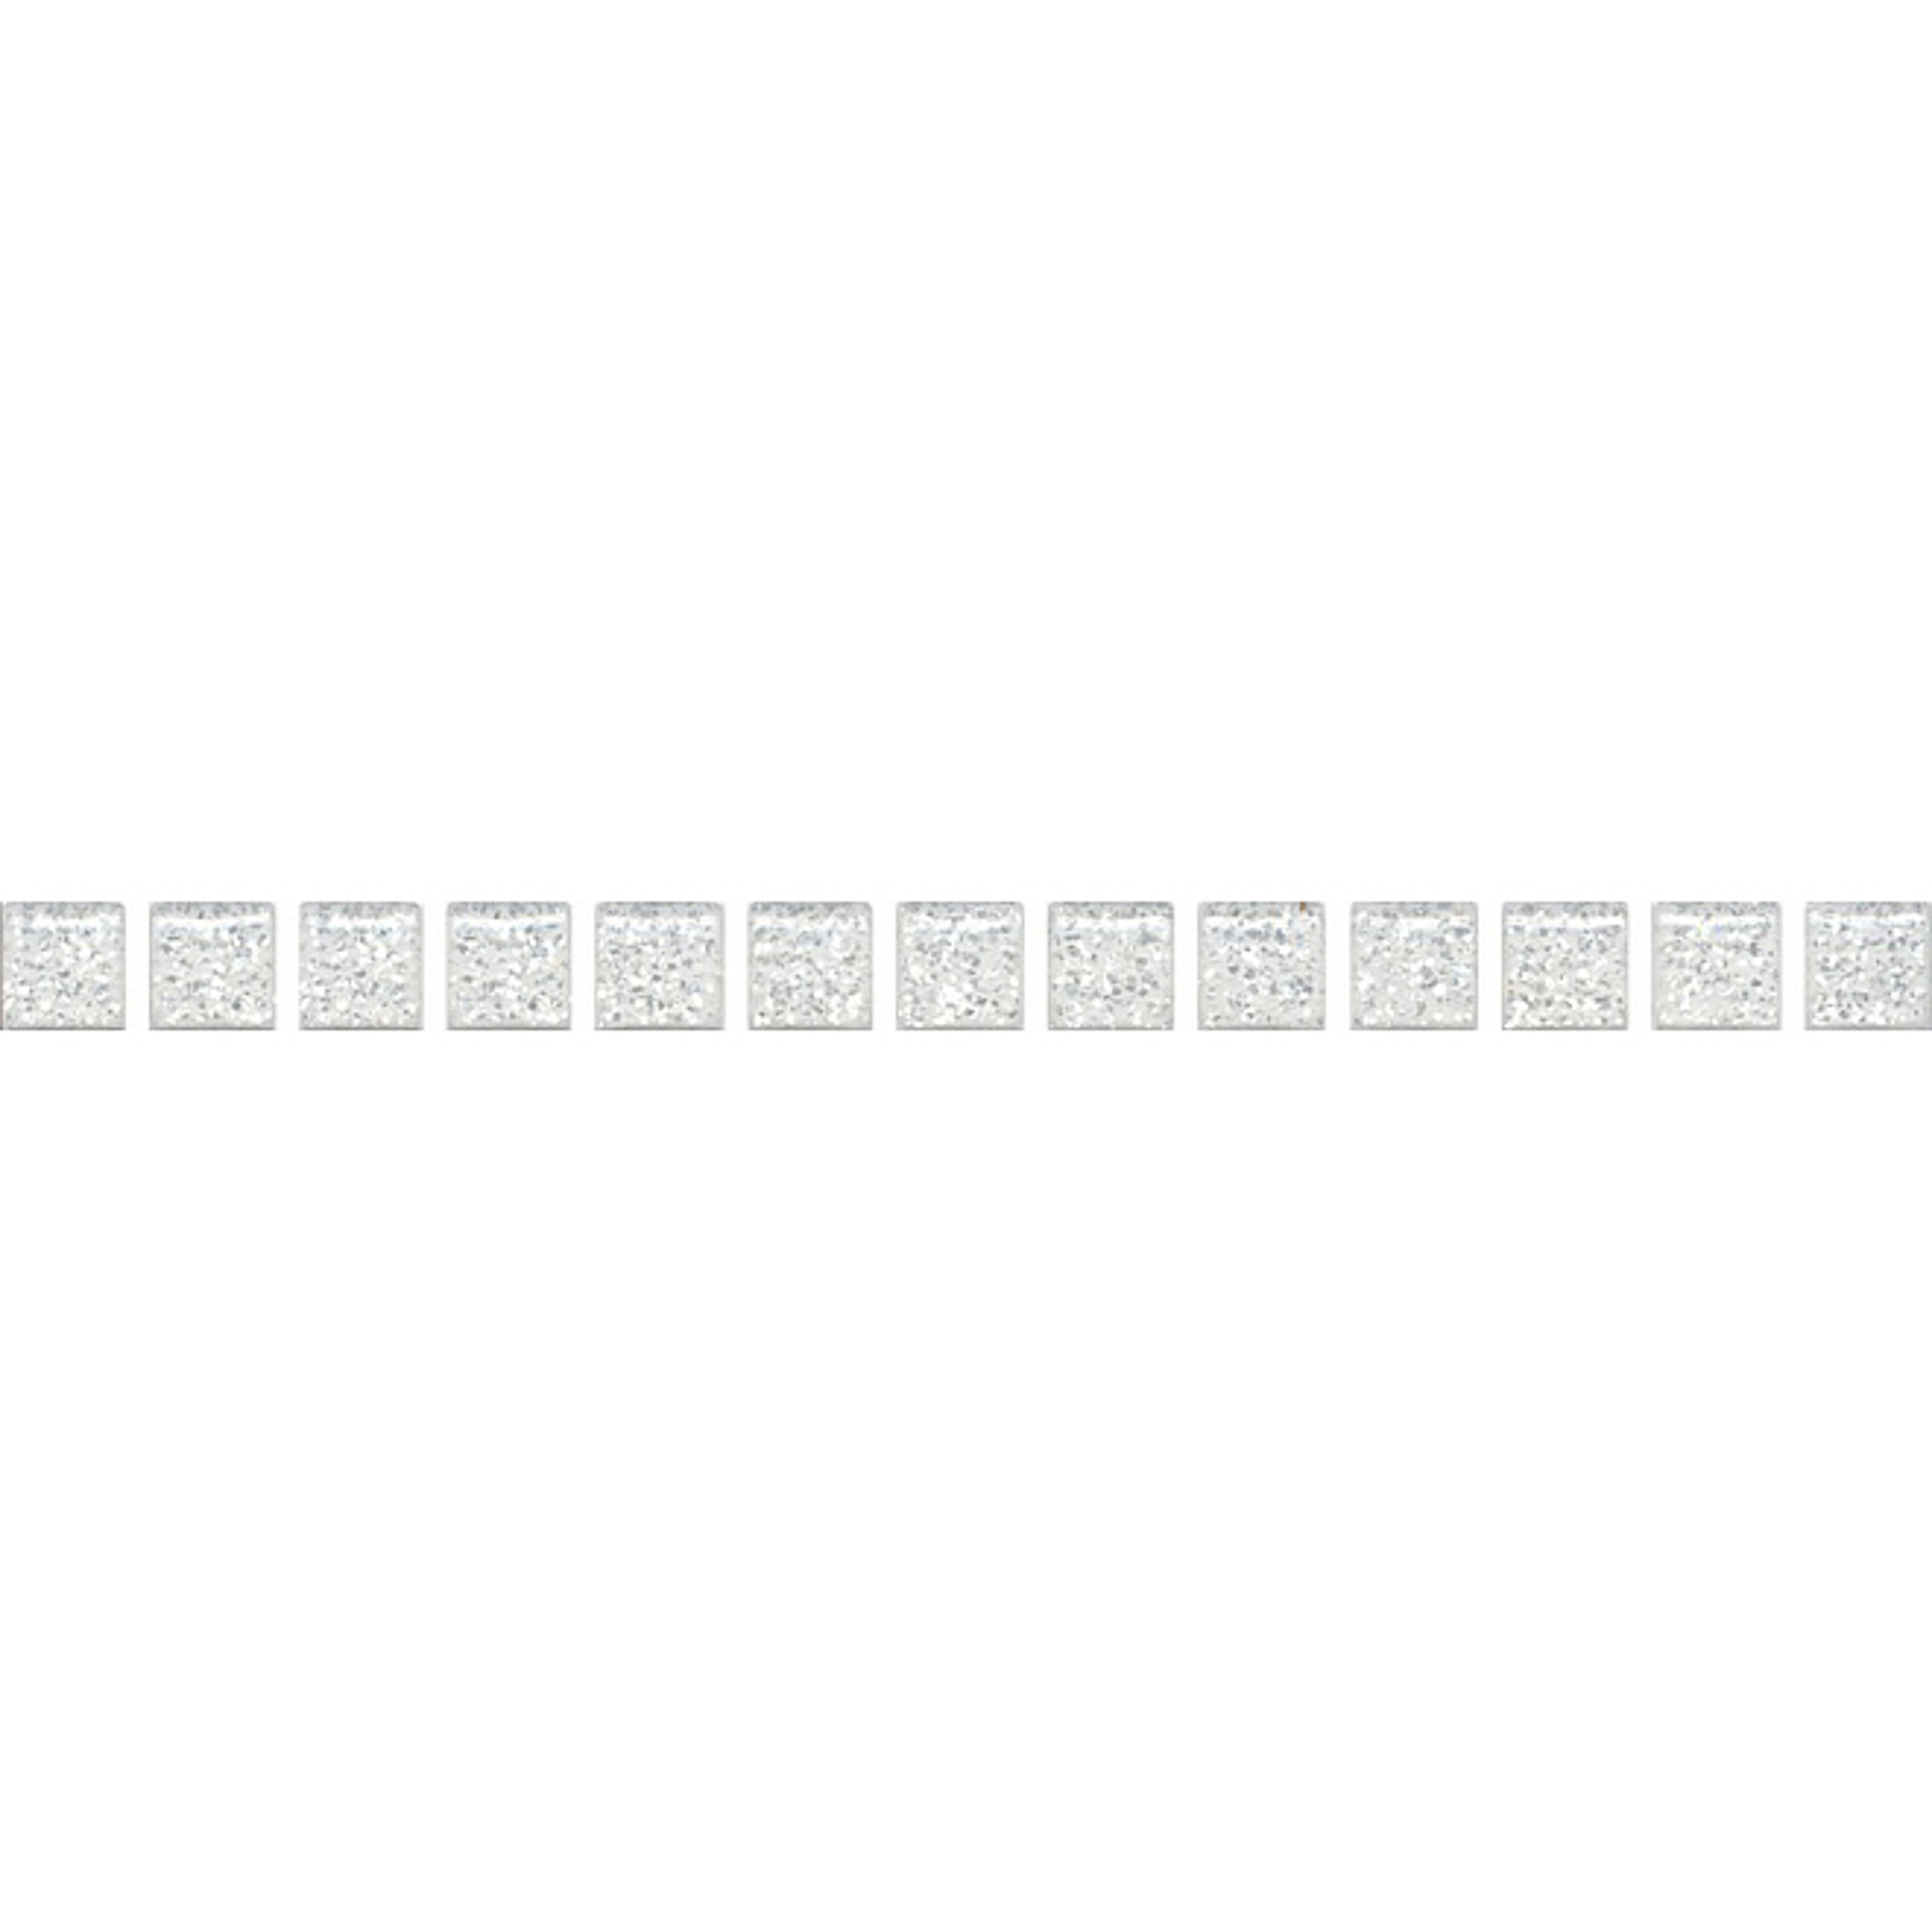 Бордюр Kerama Marazzi Бисер белый серебро 1,4x20 см POD001 подставка мишка 1 керамика серебро 18x20 см